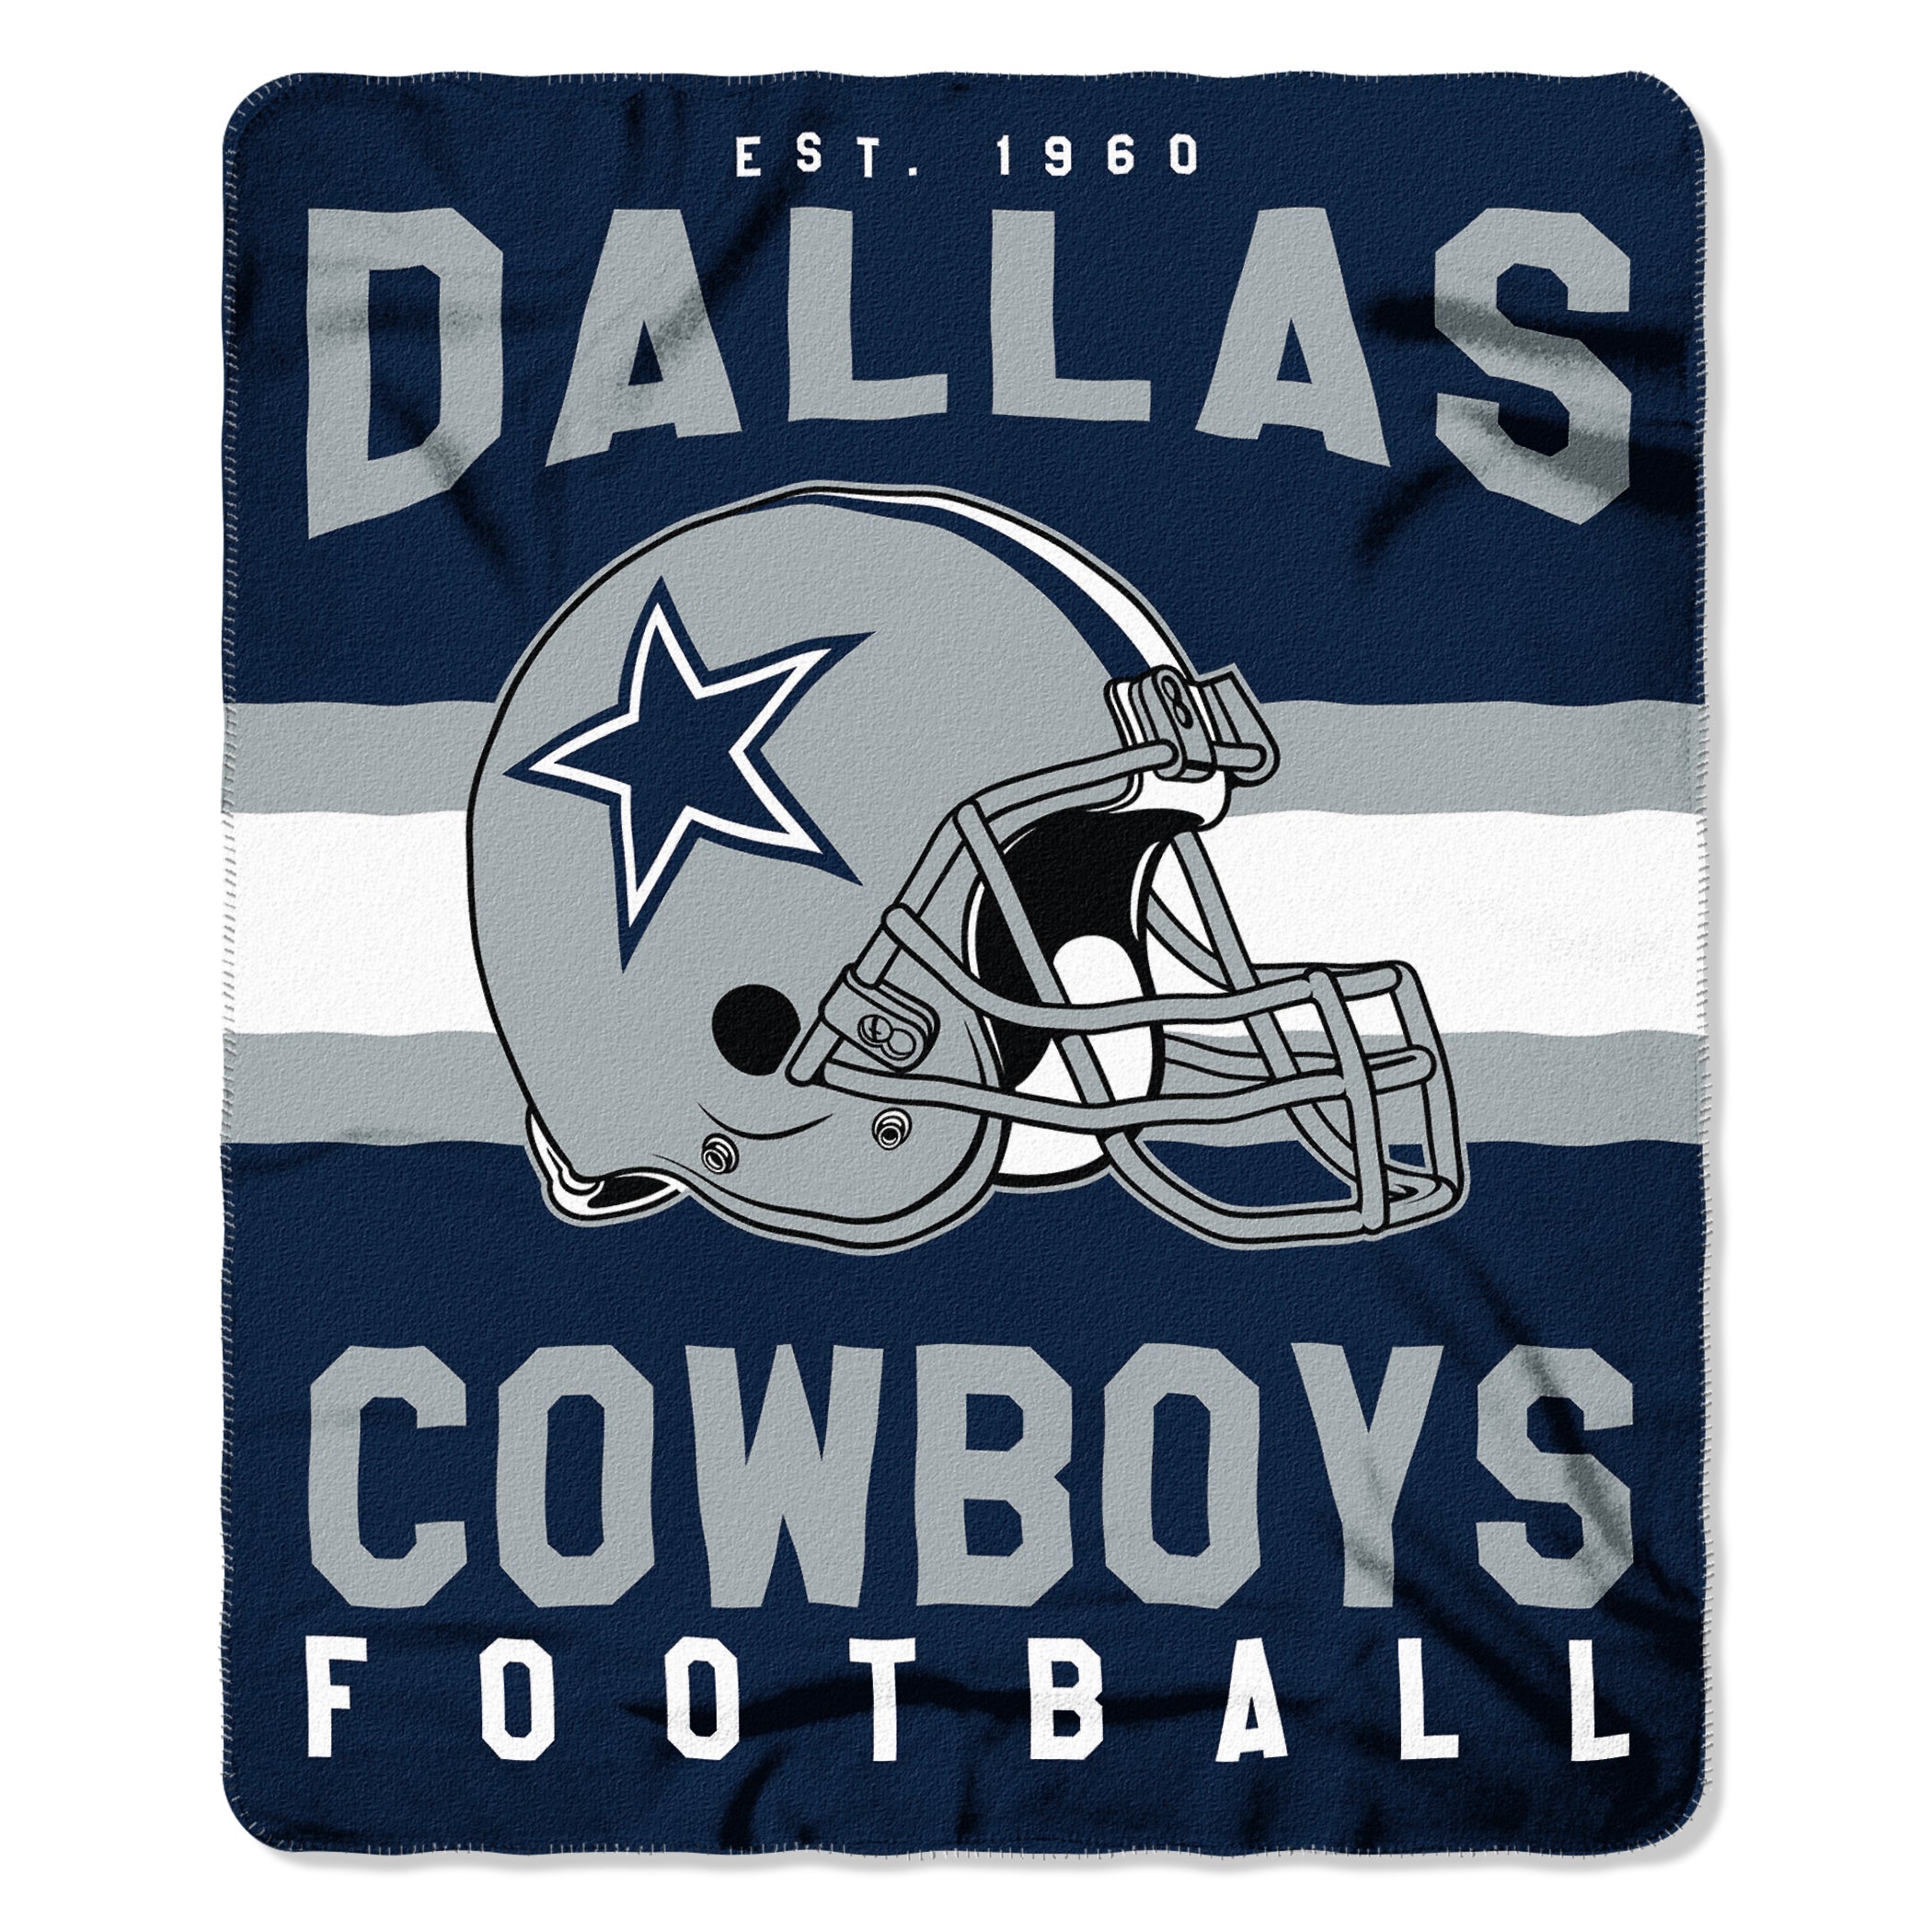 The Northwest Company Dallas Cowboys Fleece Throw